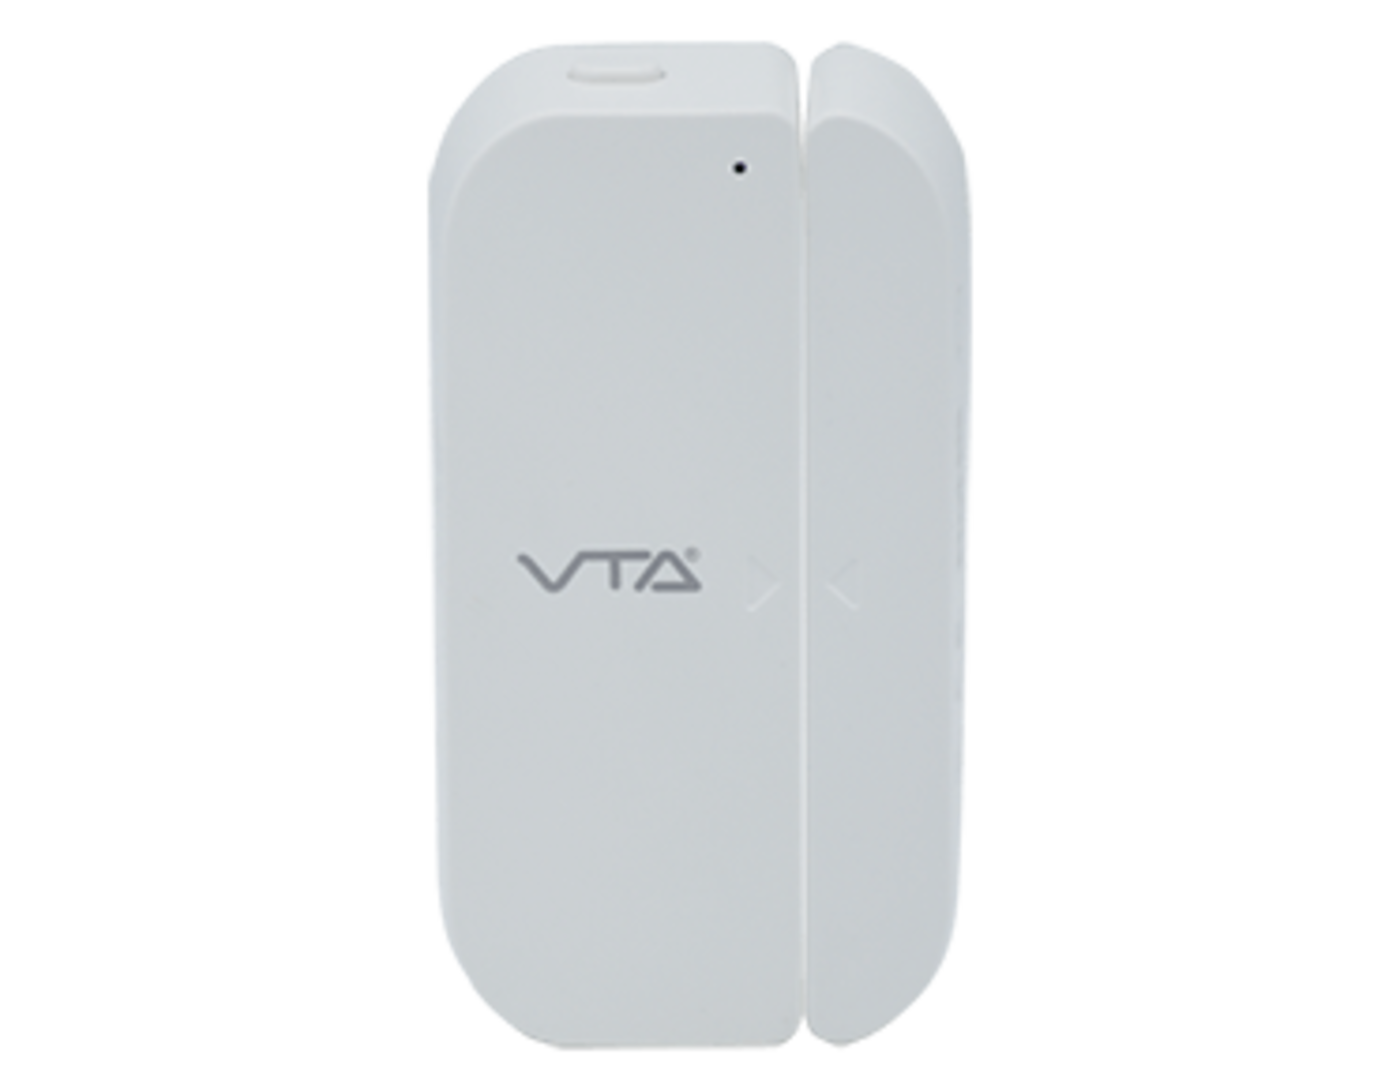 Sensor VTA Puerta y Ventana Wifi